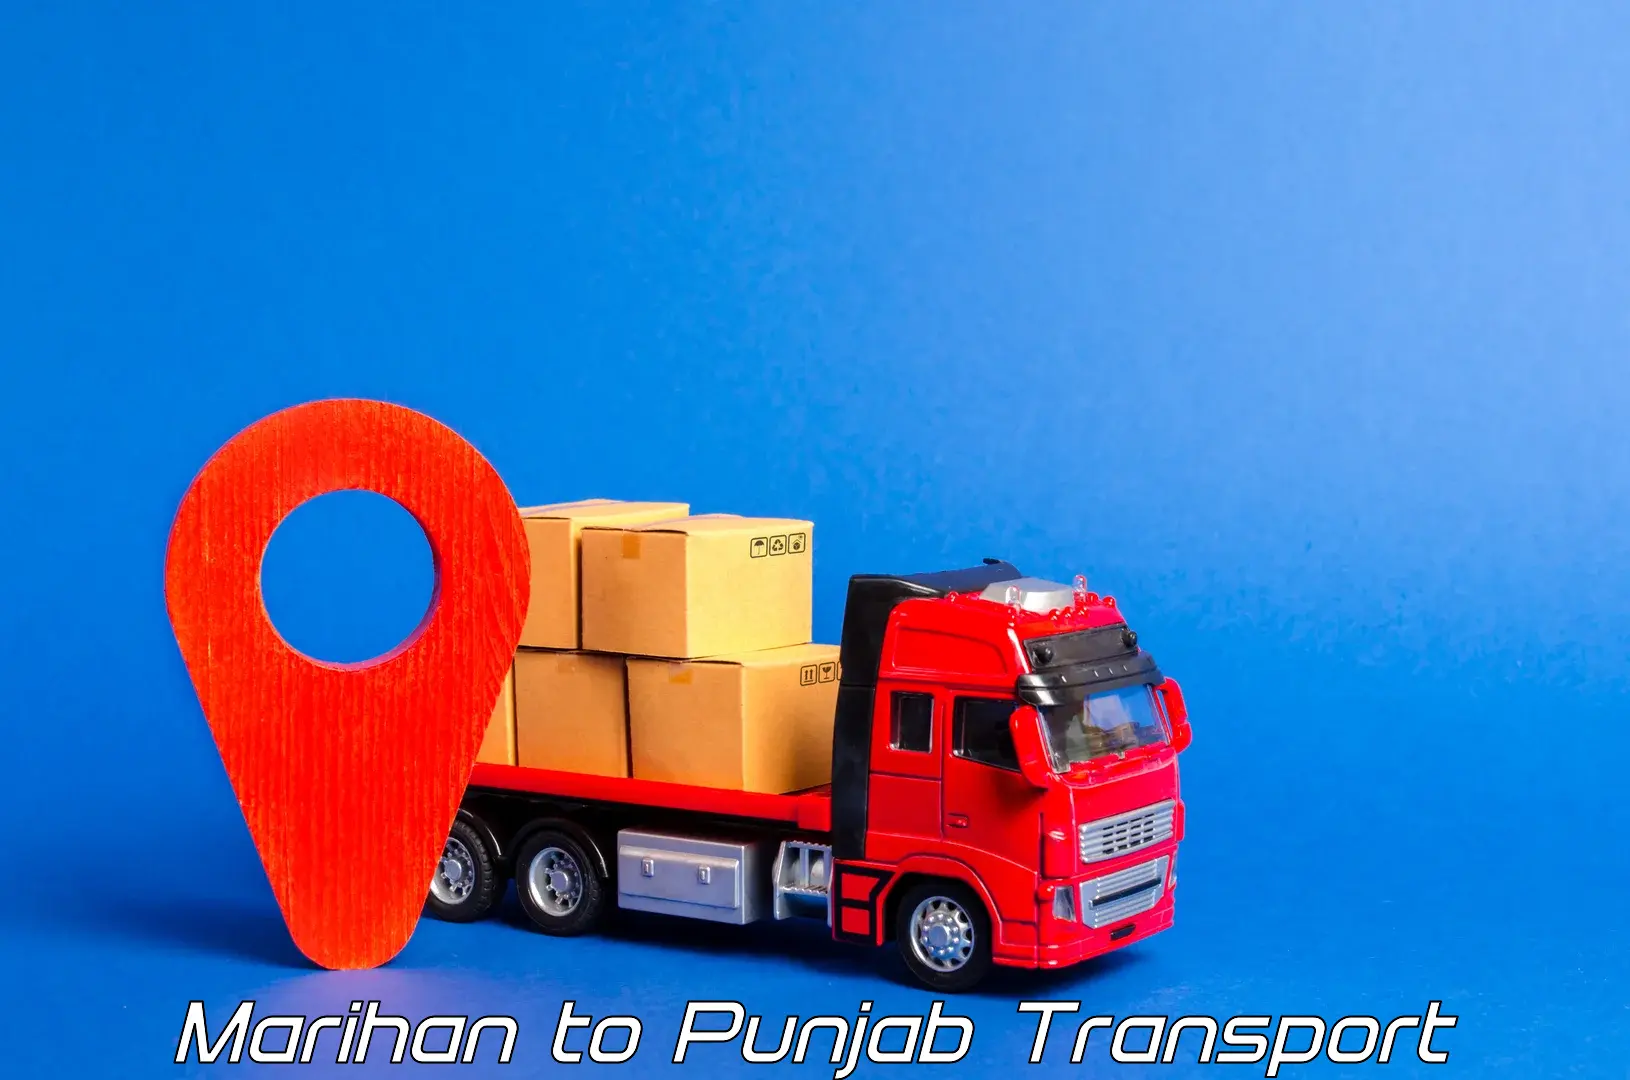 Sending bike to another city in Marihan to Punjab